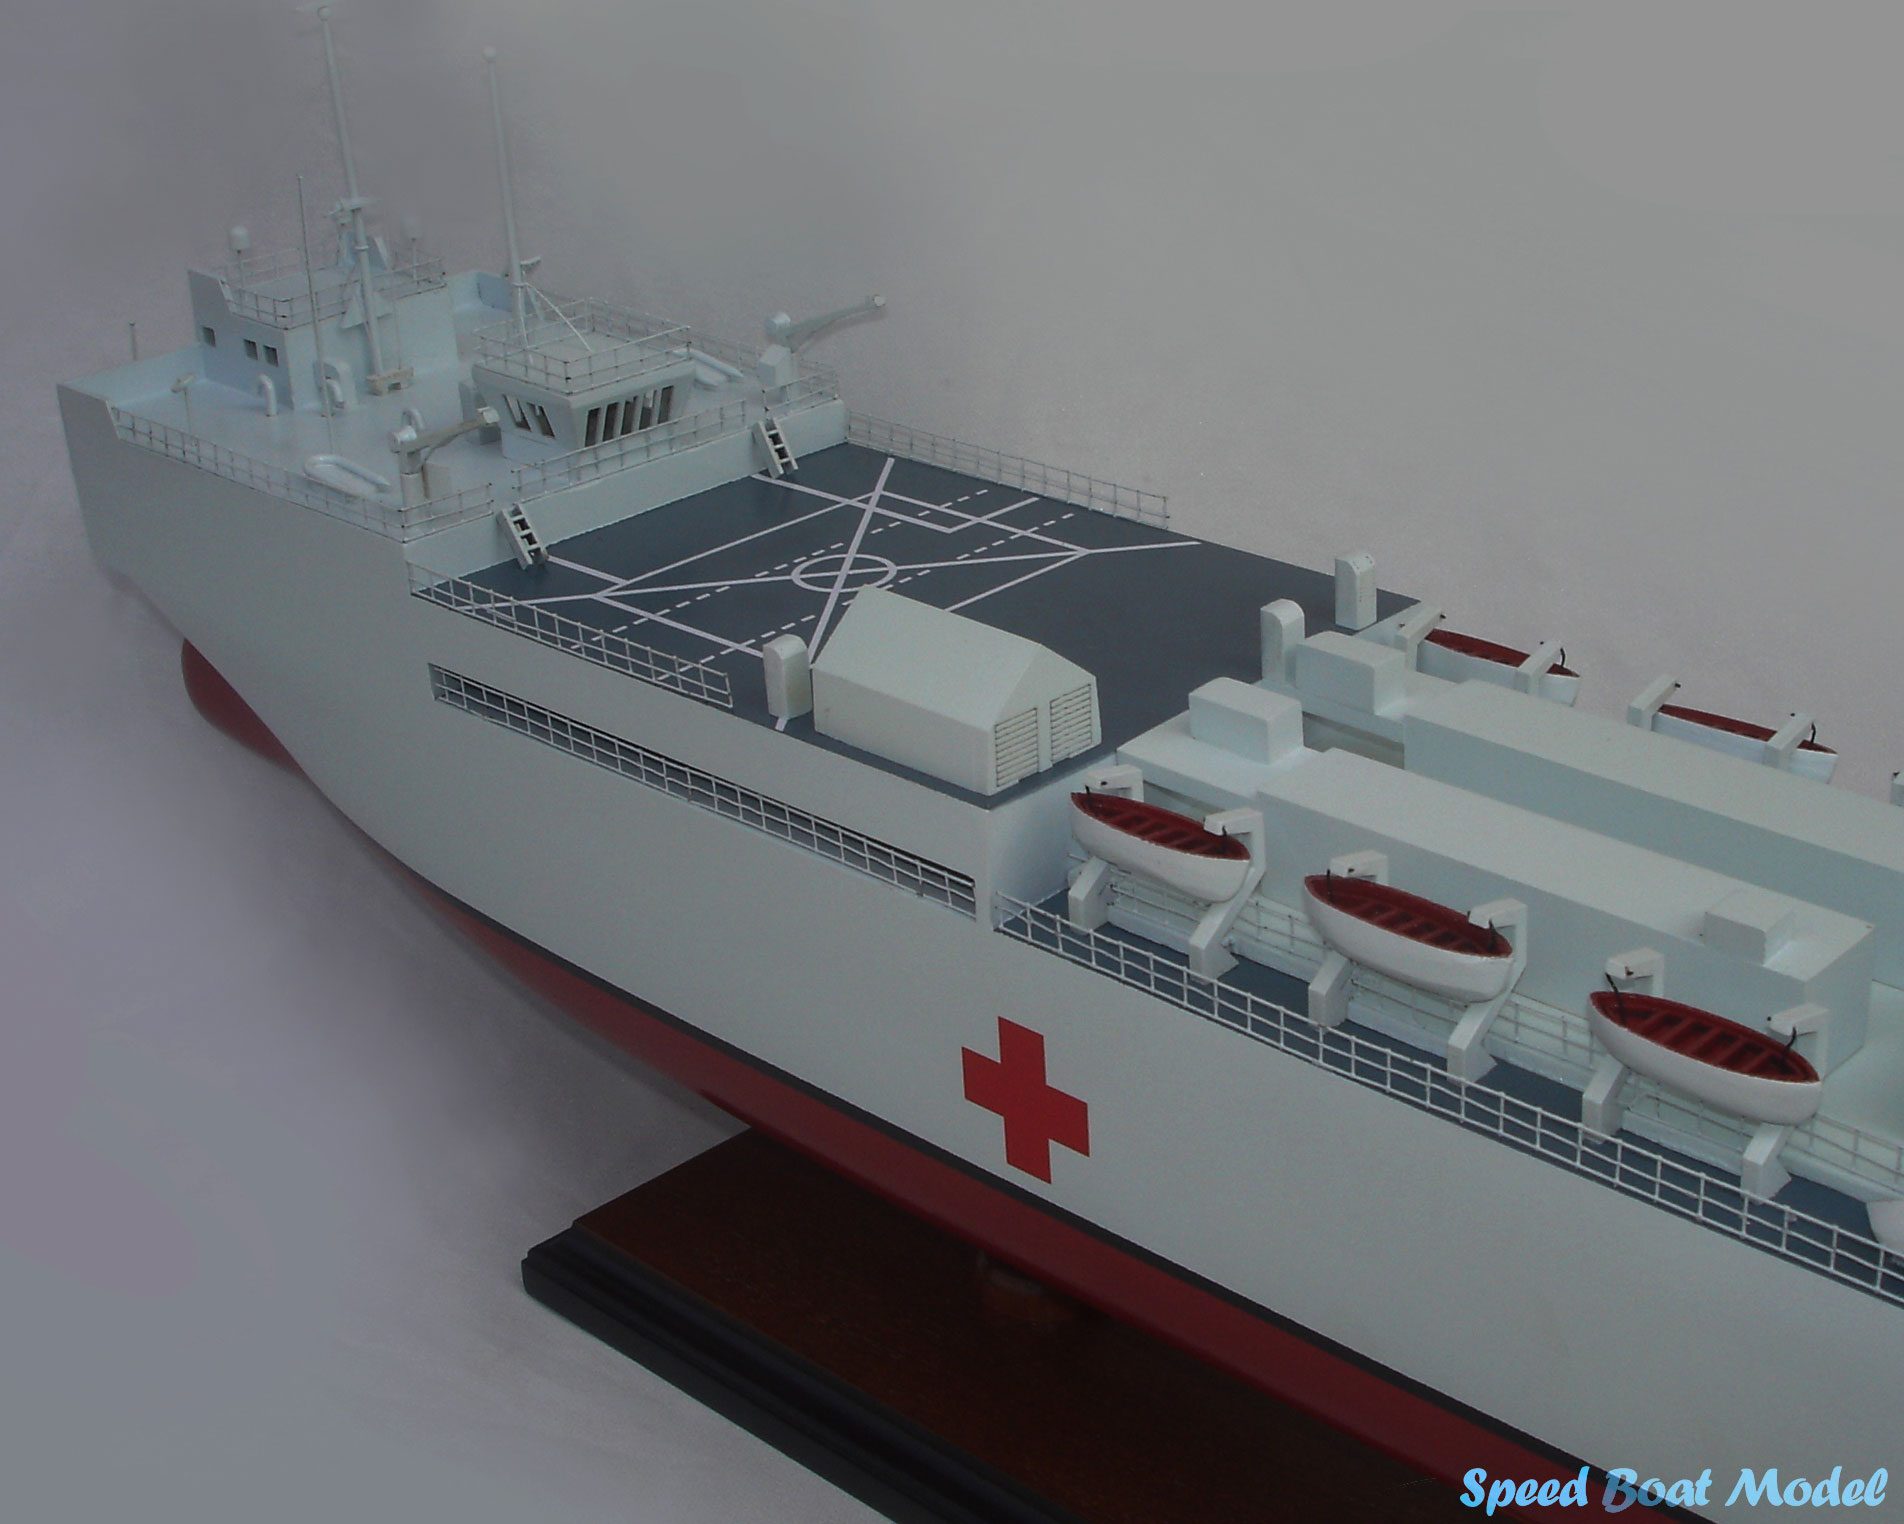 Usns Mercy Warship Model 36.2"